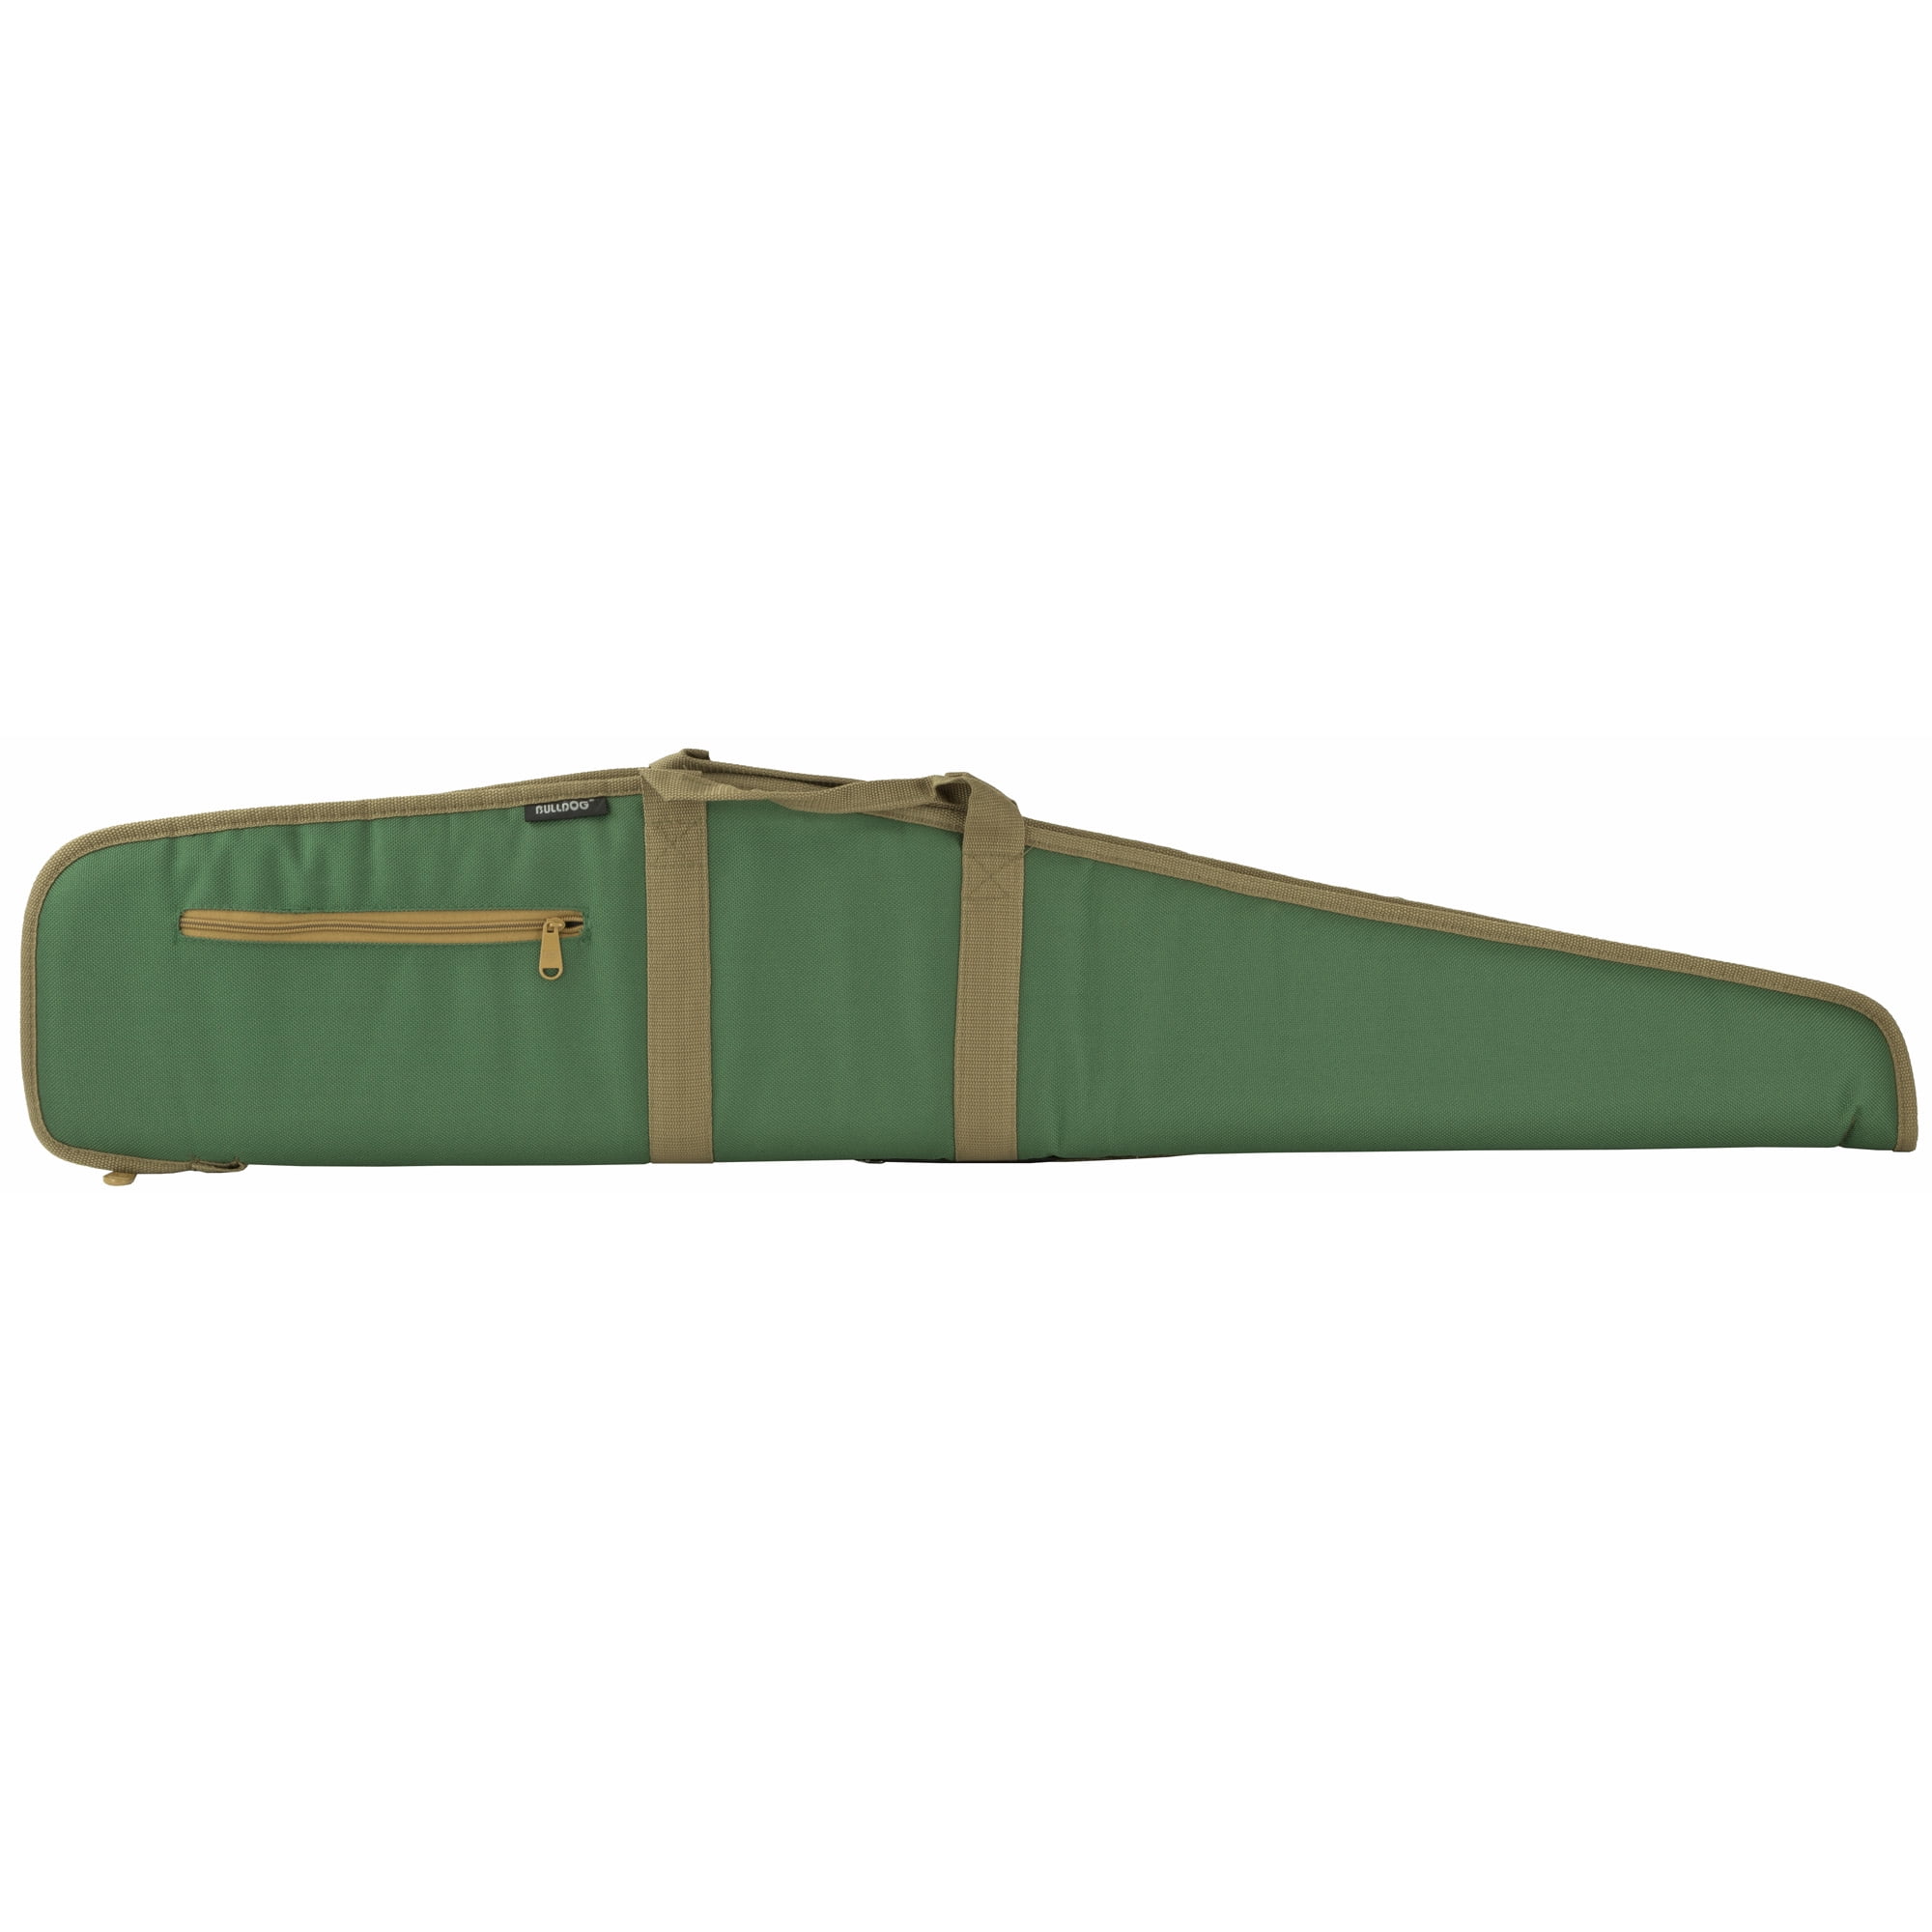 Bulldog Extreme Green Scoped Rifle Case with Tan Trim 